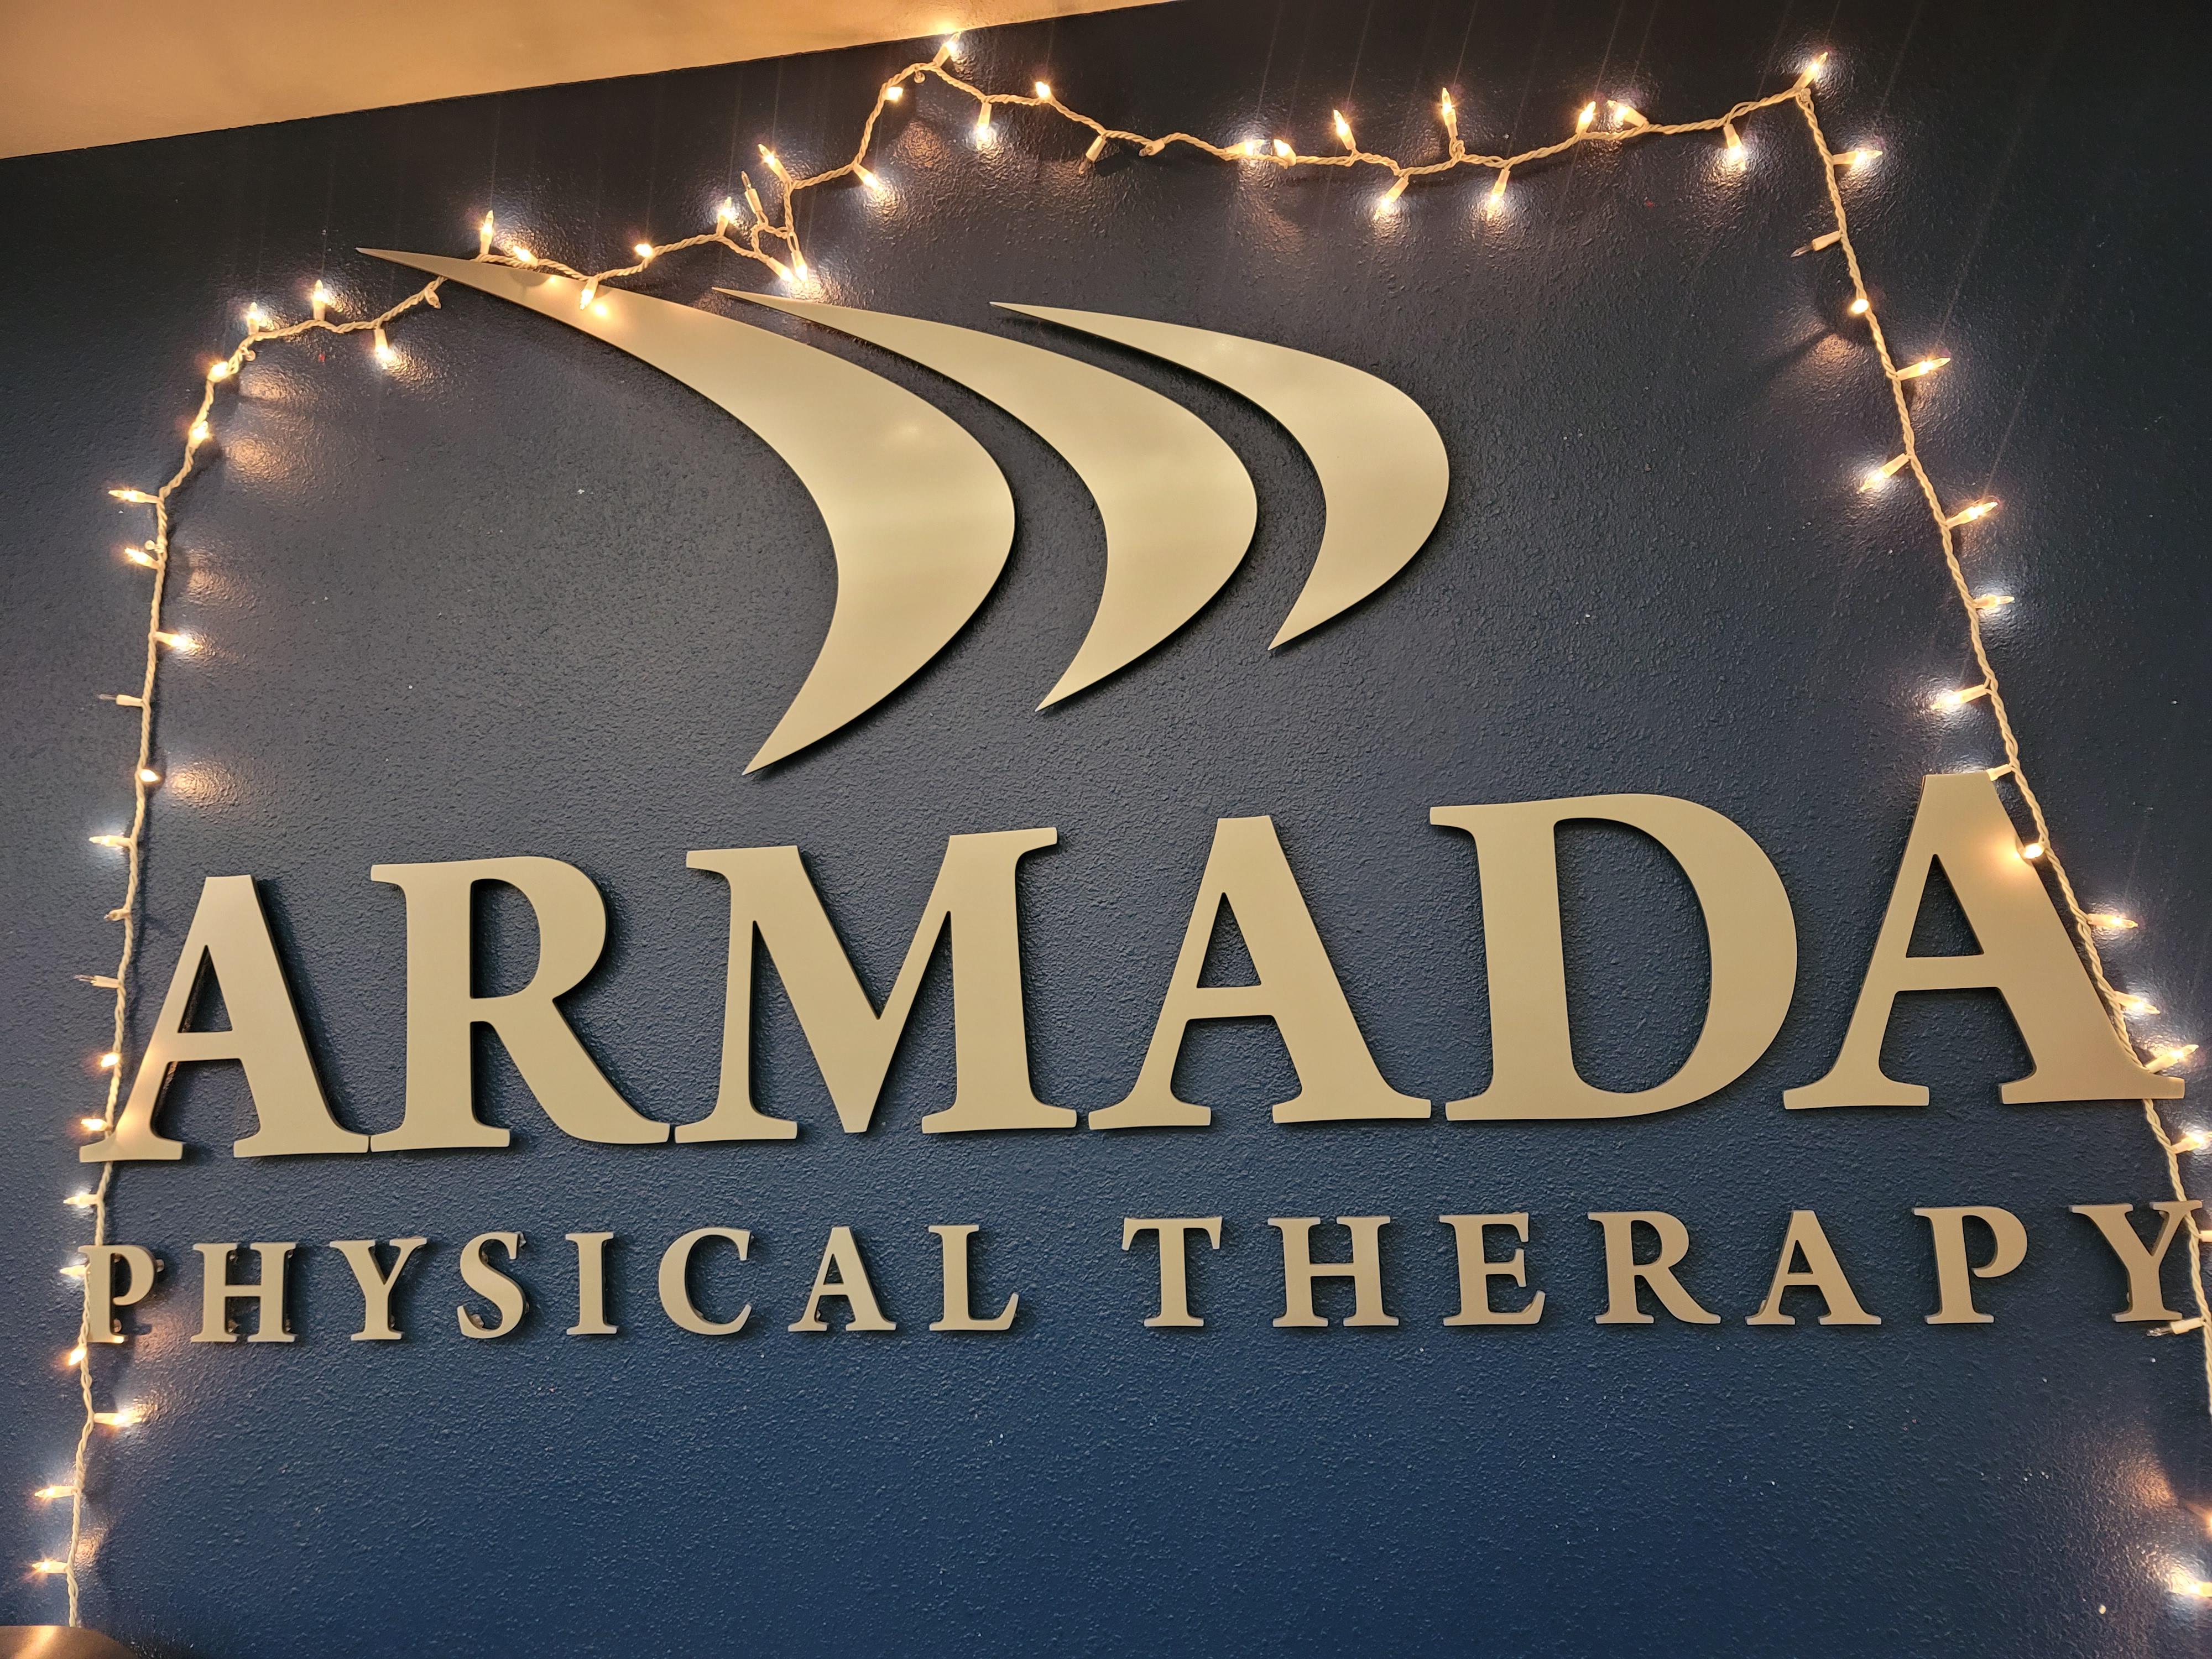 Armada Physical Therapy 
2929 Coors Blvd NW
Albuquerque